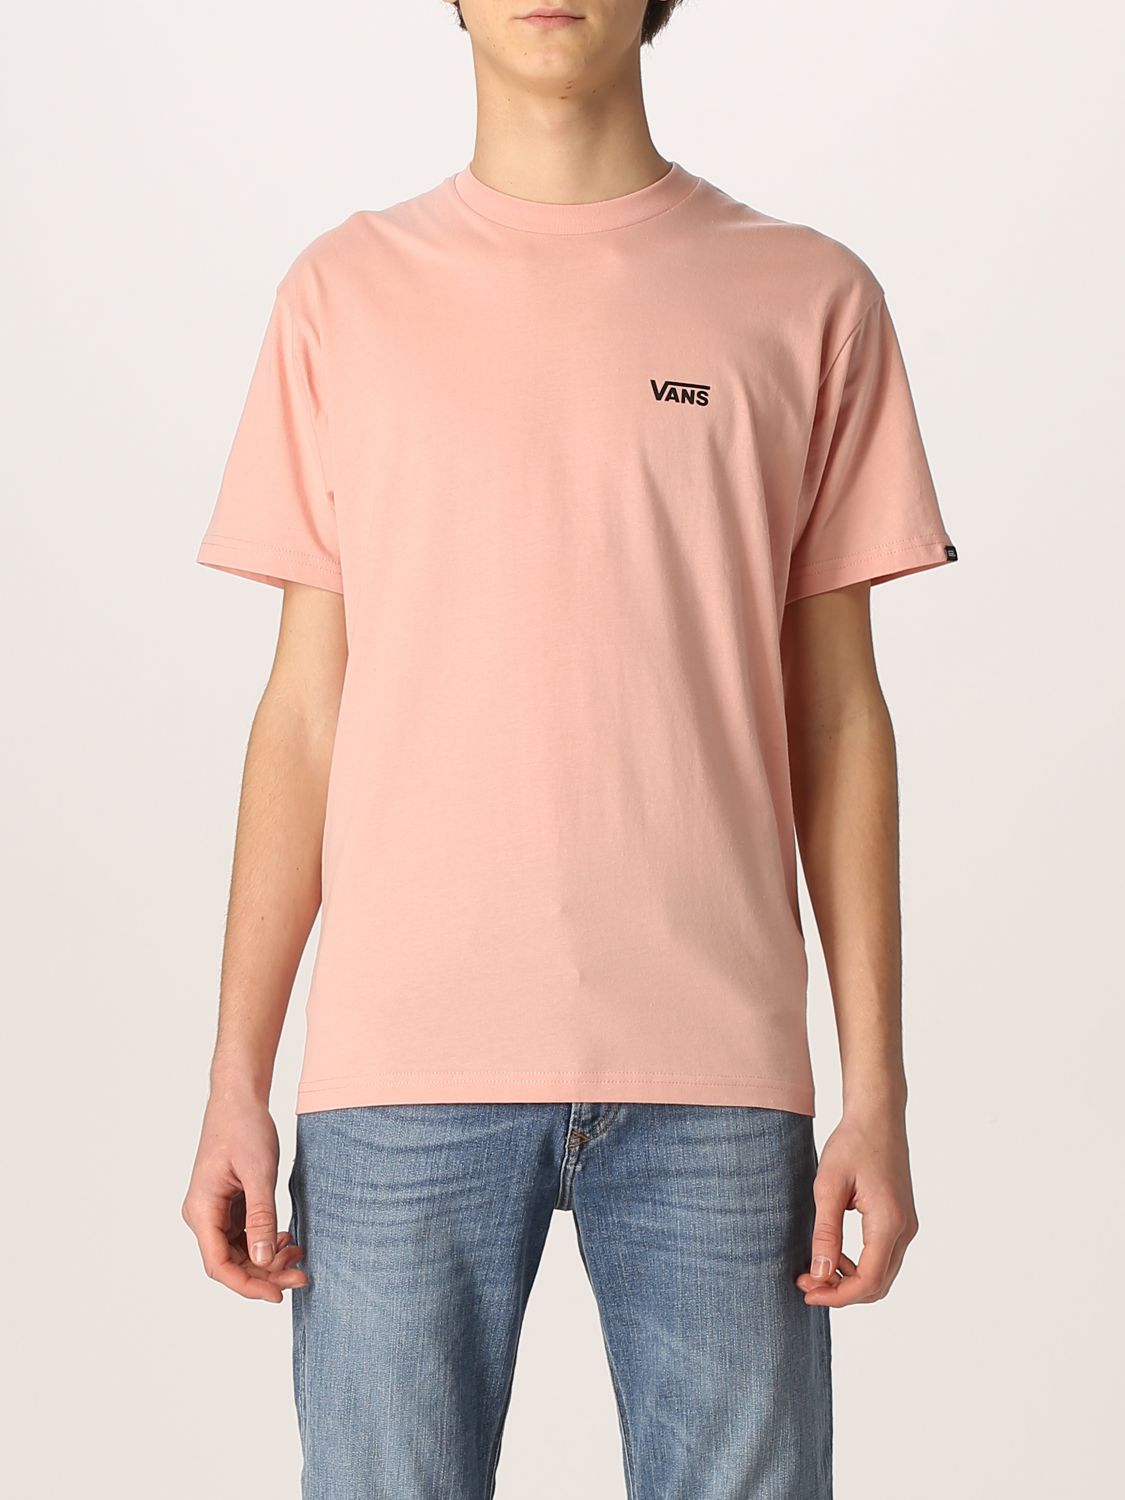 Vans Tシャツ メンズ ピンク Giglio Comオンラインのvans Tシャツ Vn0a54tf